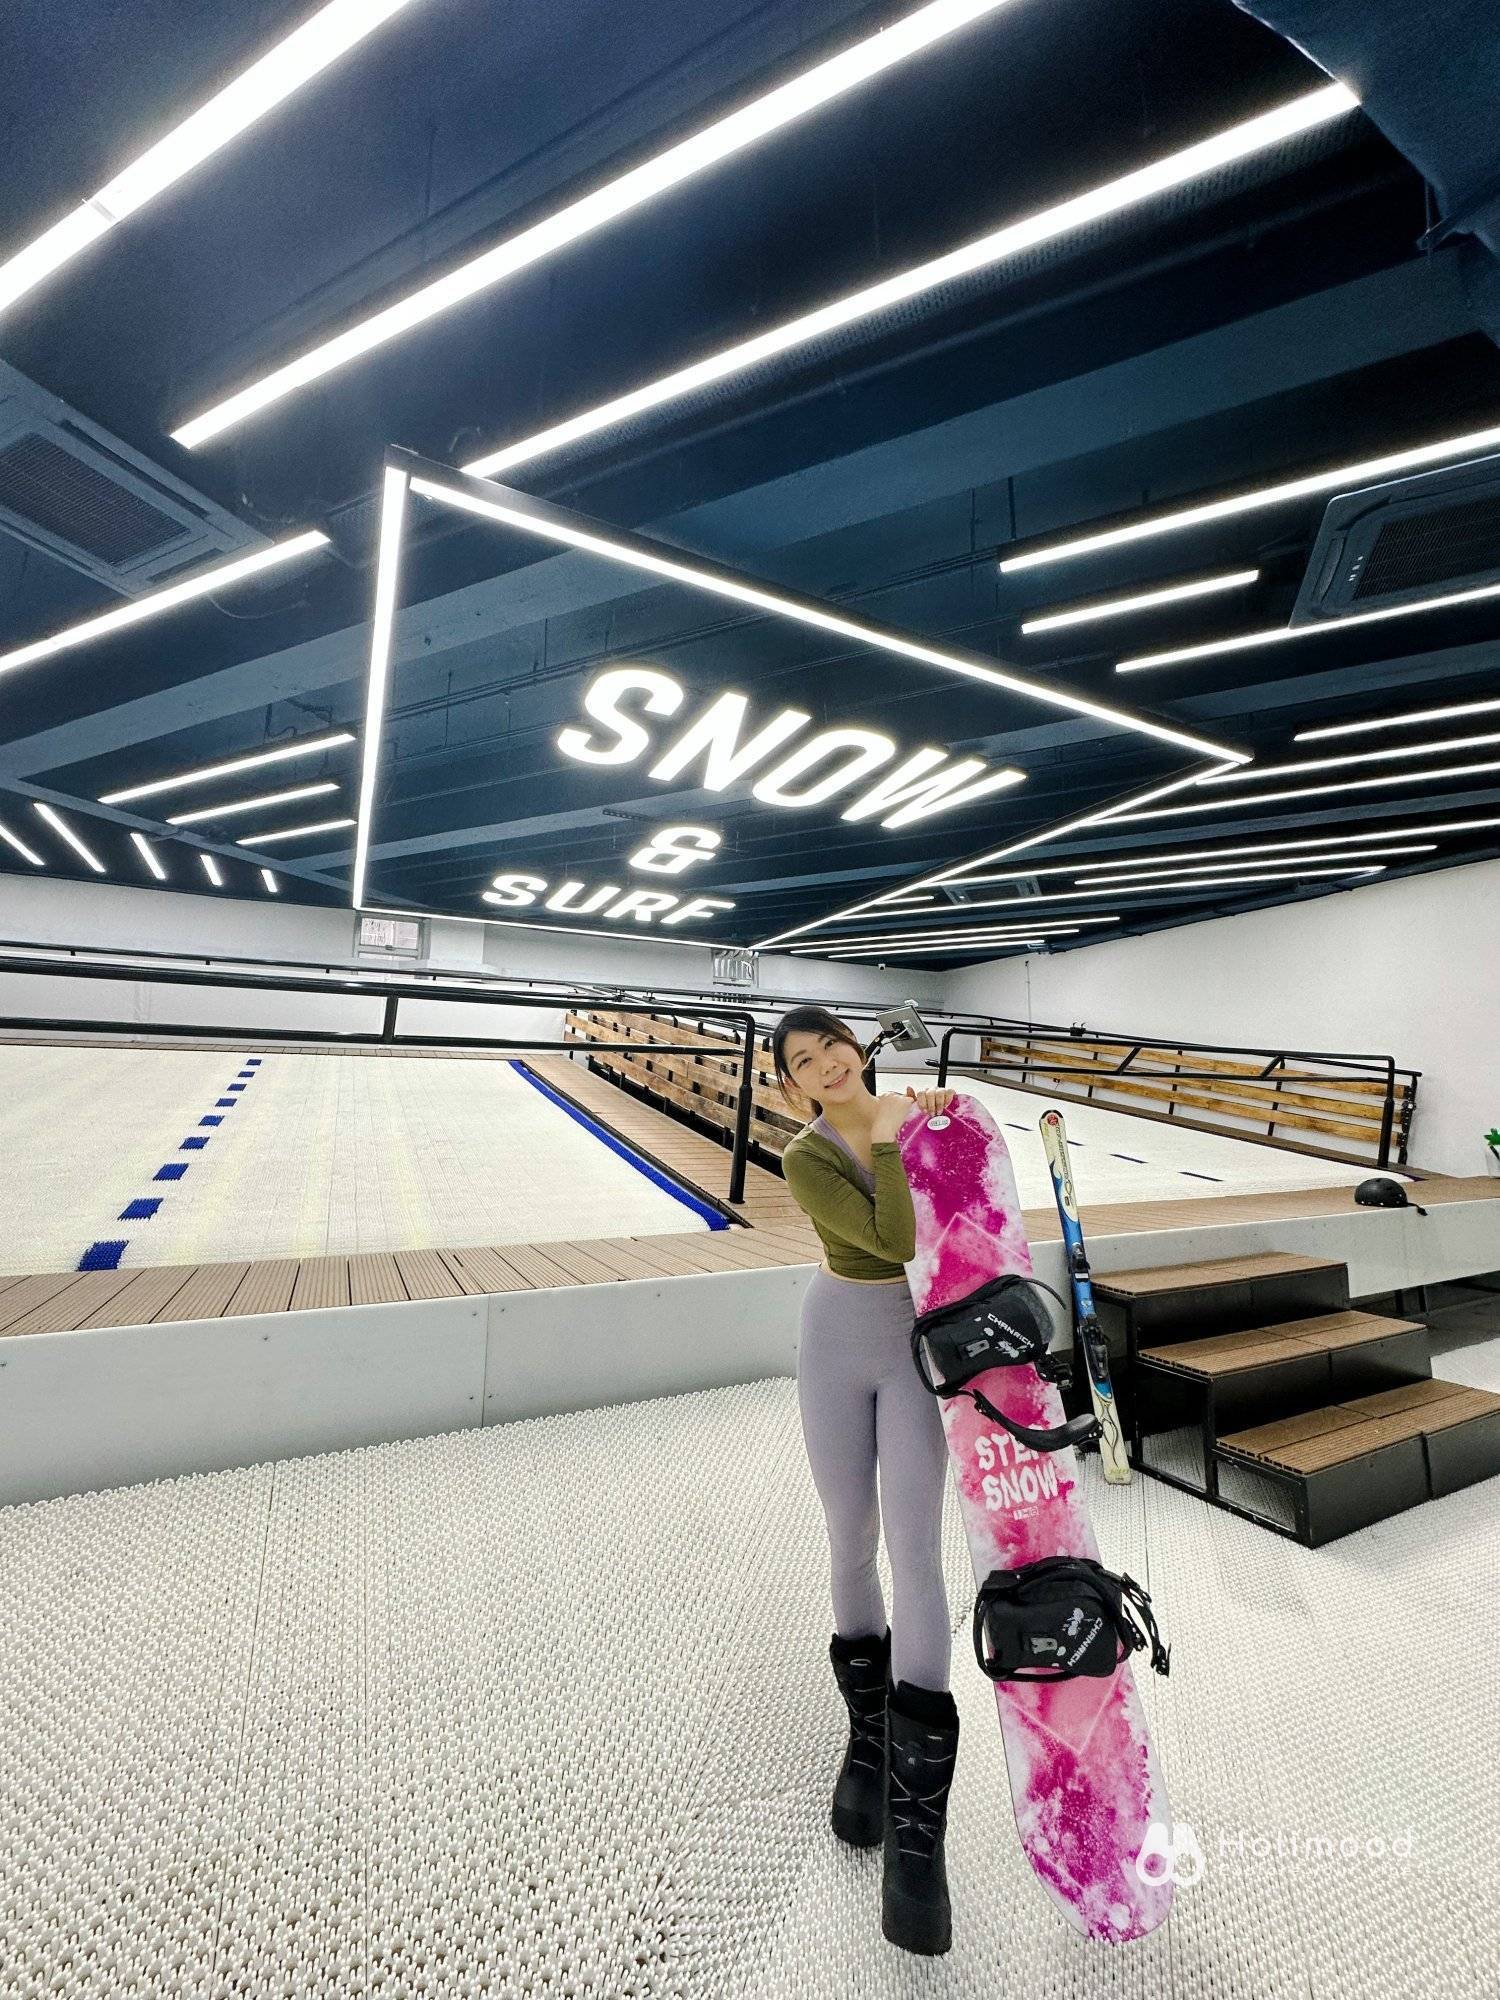 Snow & Surf 室內滑雪衝浪體驗/ 套票及包場優惠 【Surf Up Moment 】1st HK Indoor Snow & Surf Experience 6